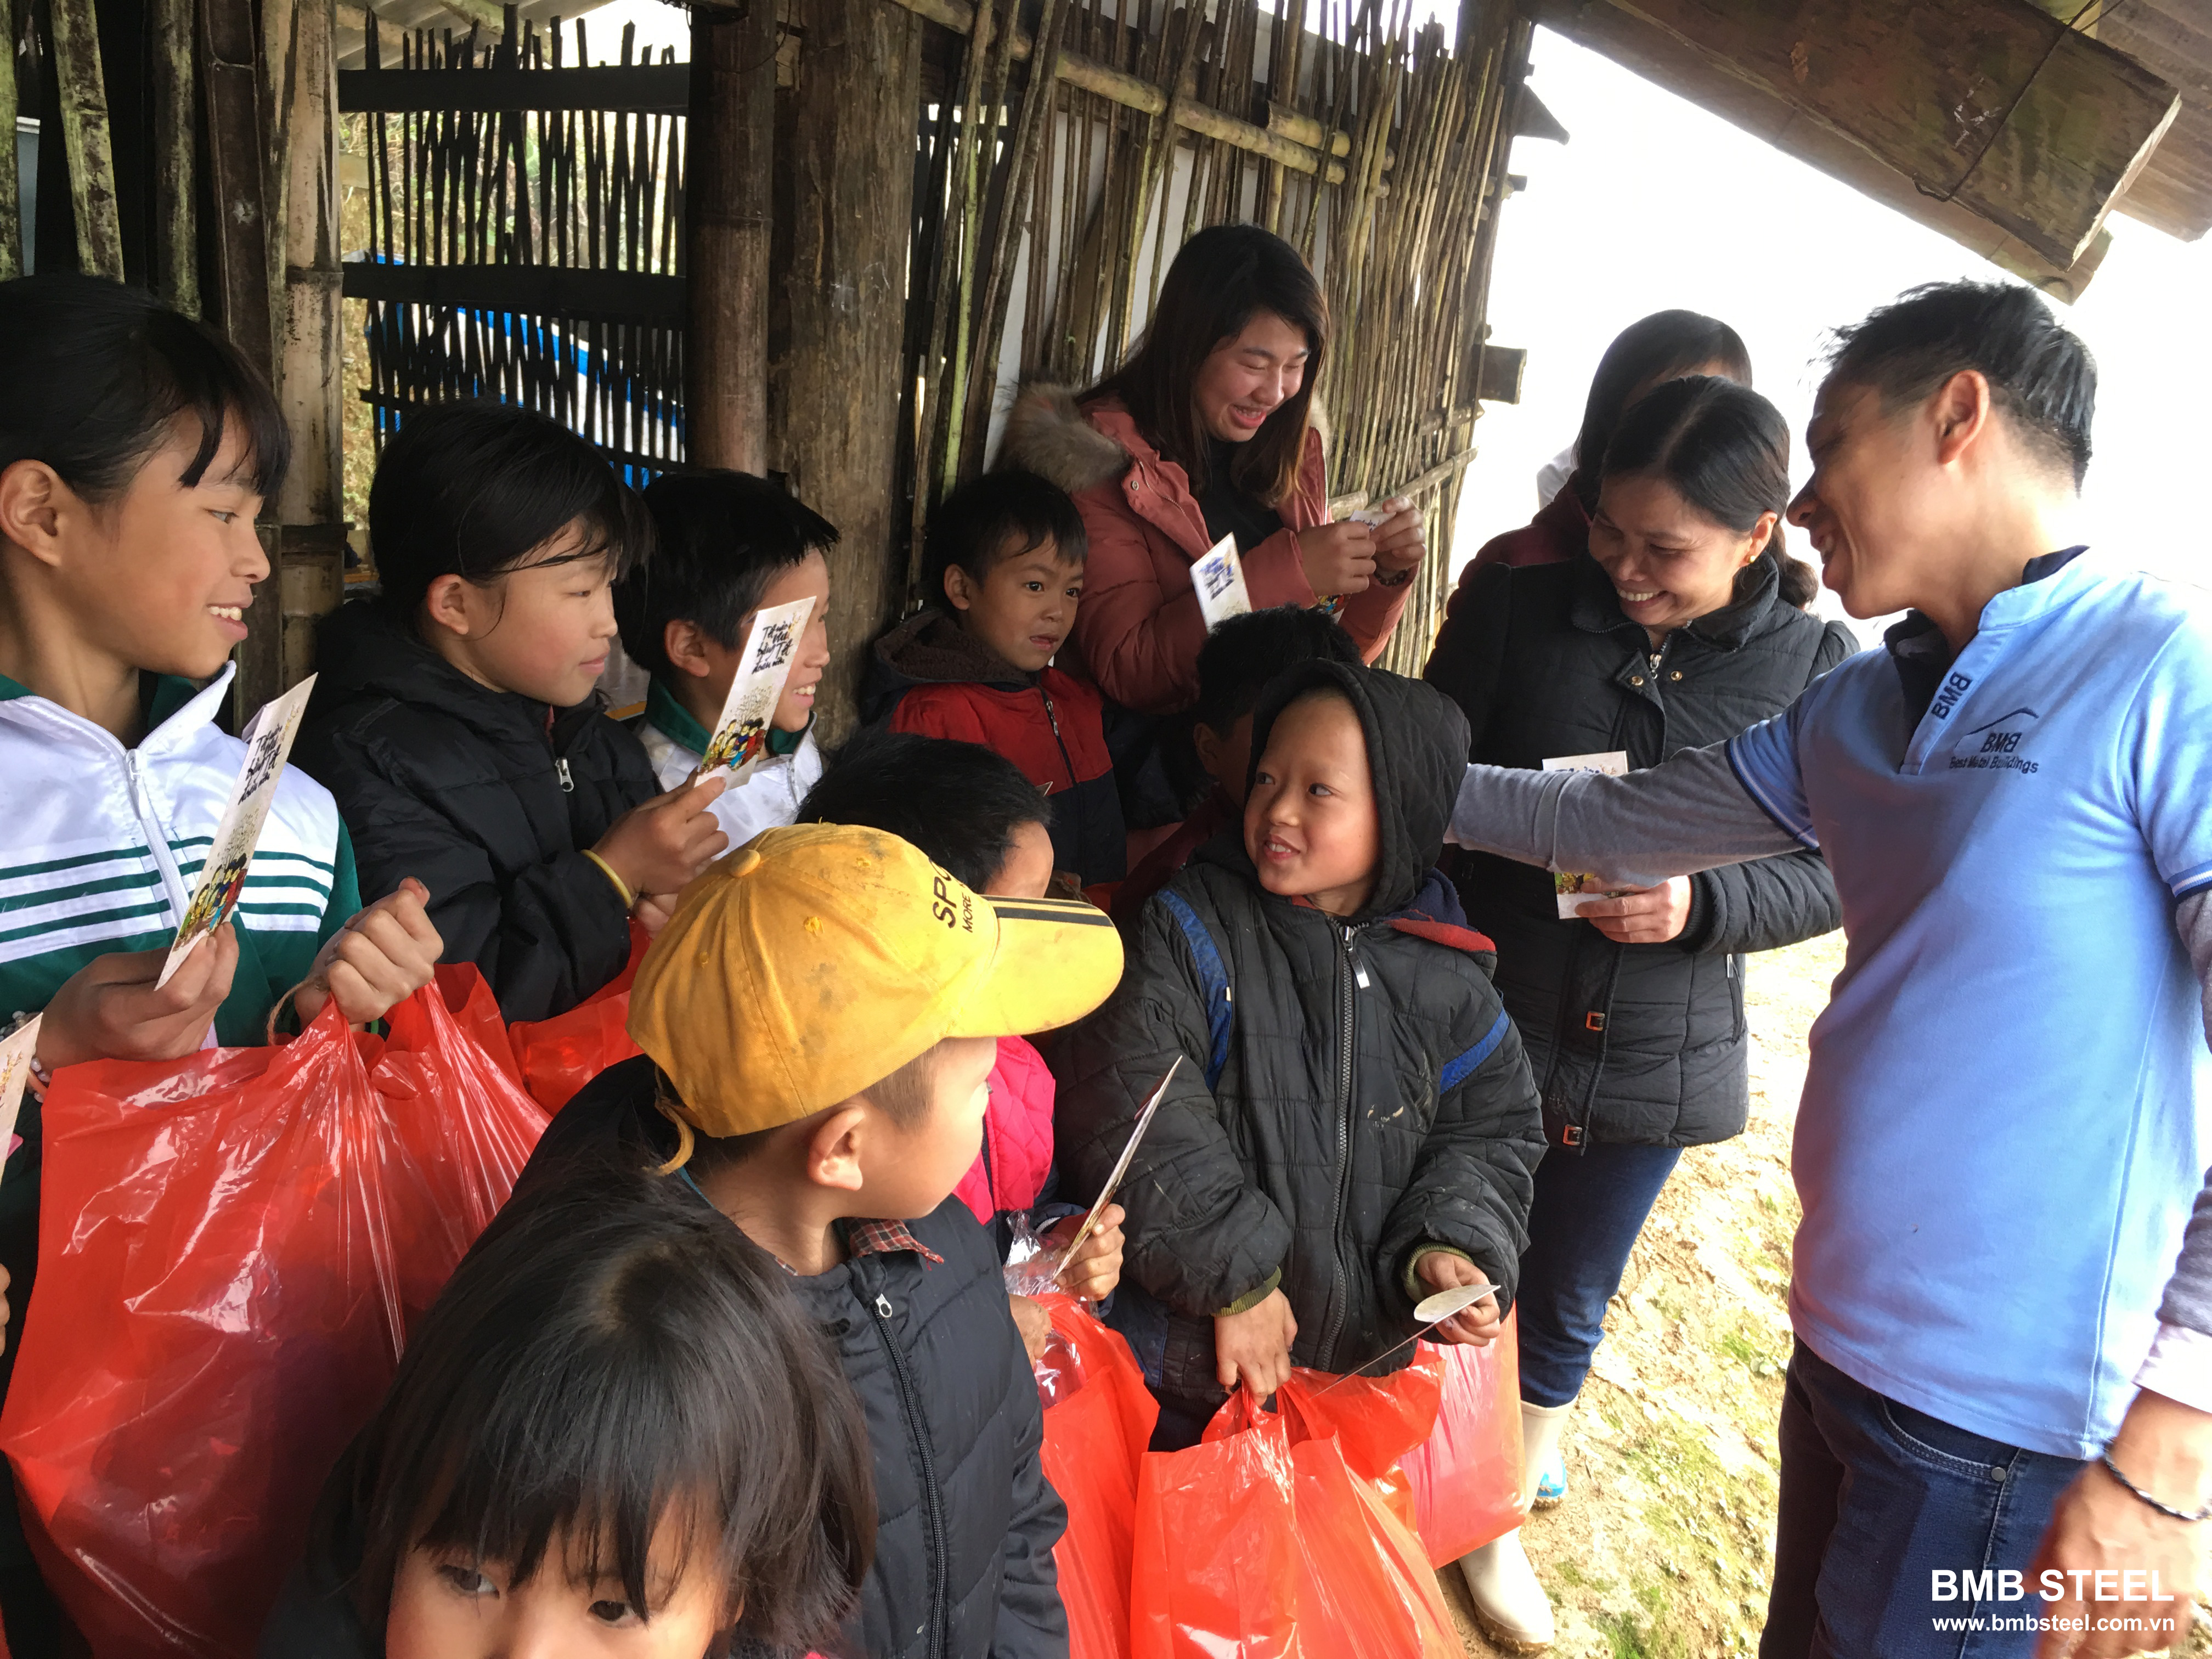 BMB Steel presented gift for children in Cao Bang, Vietnam 7